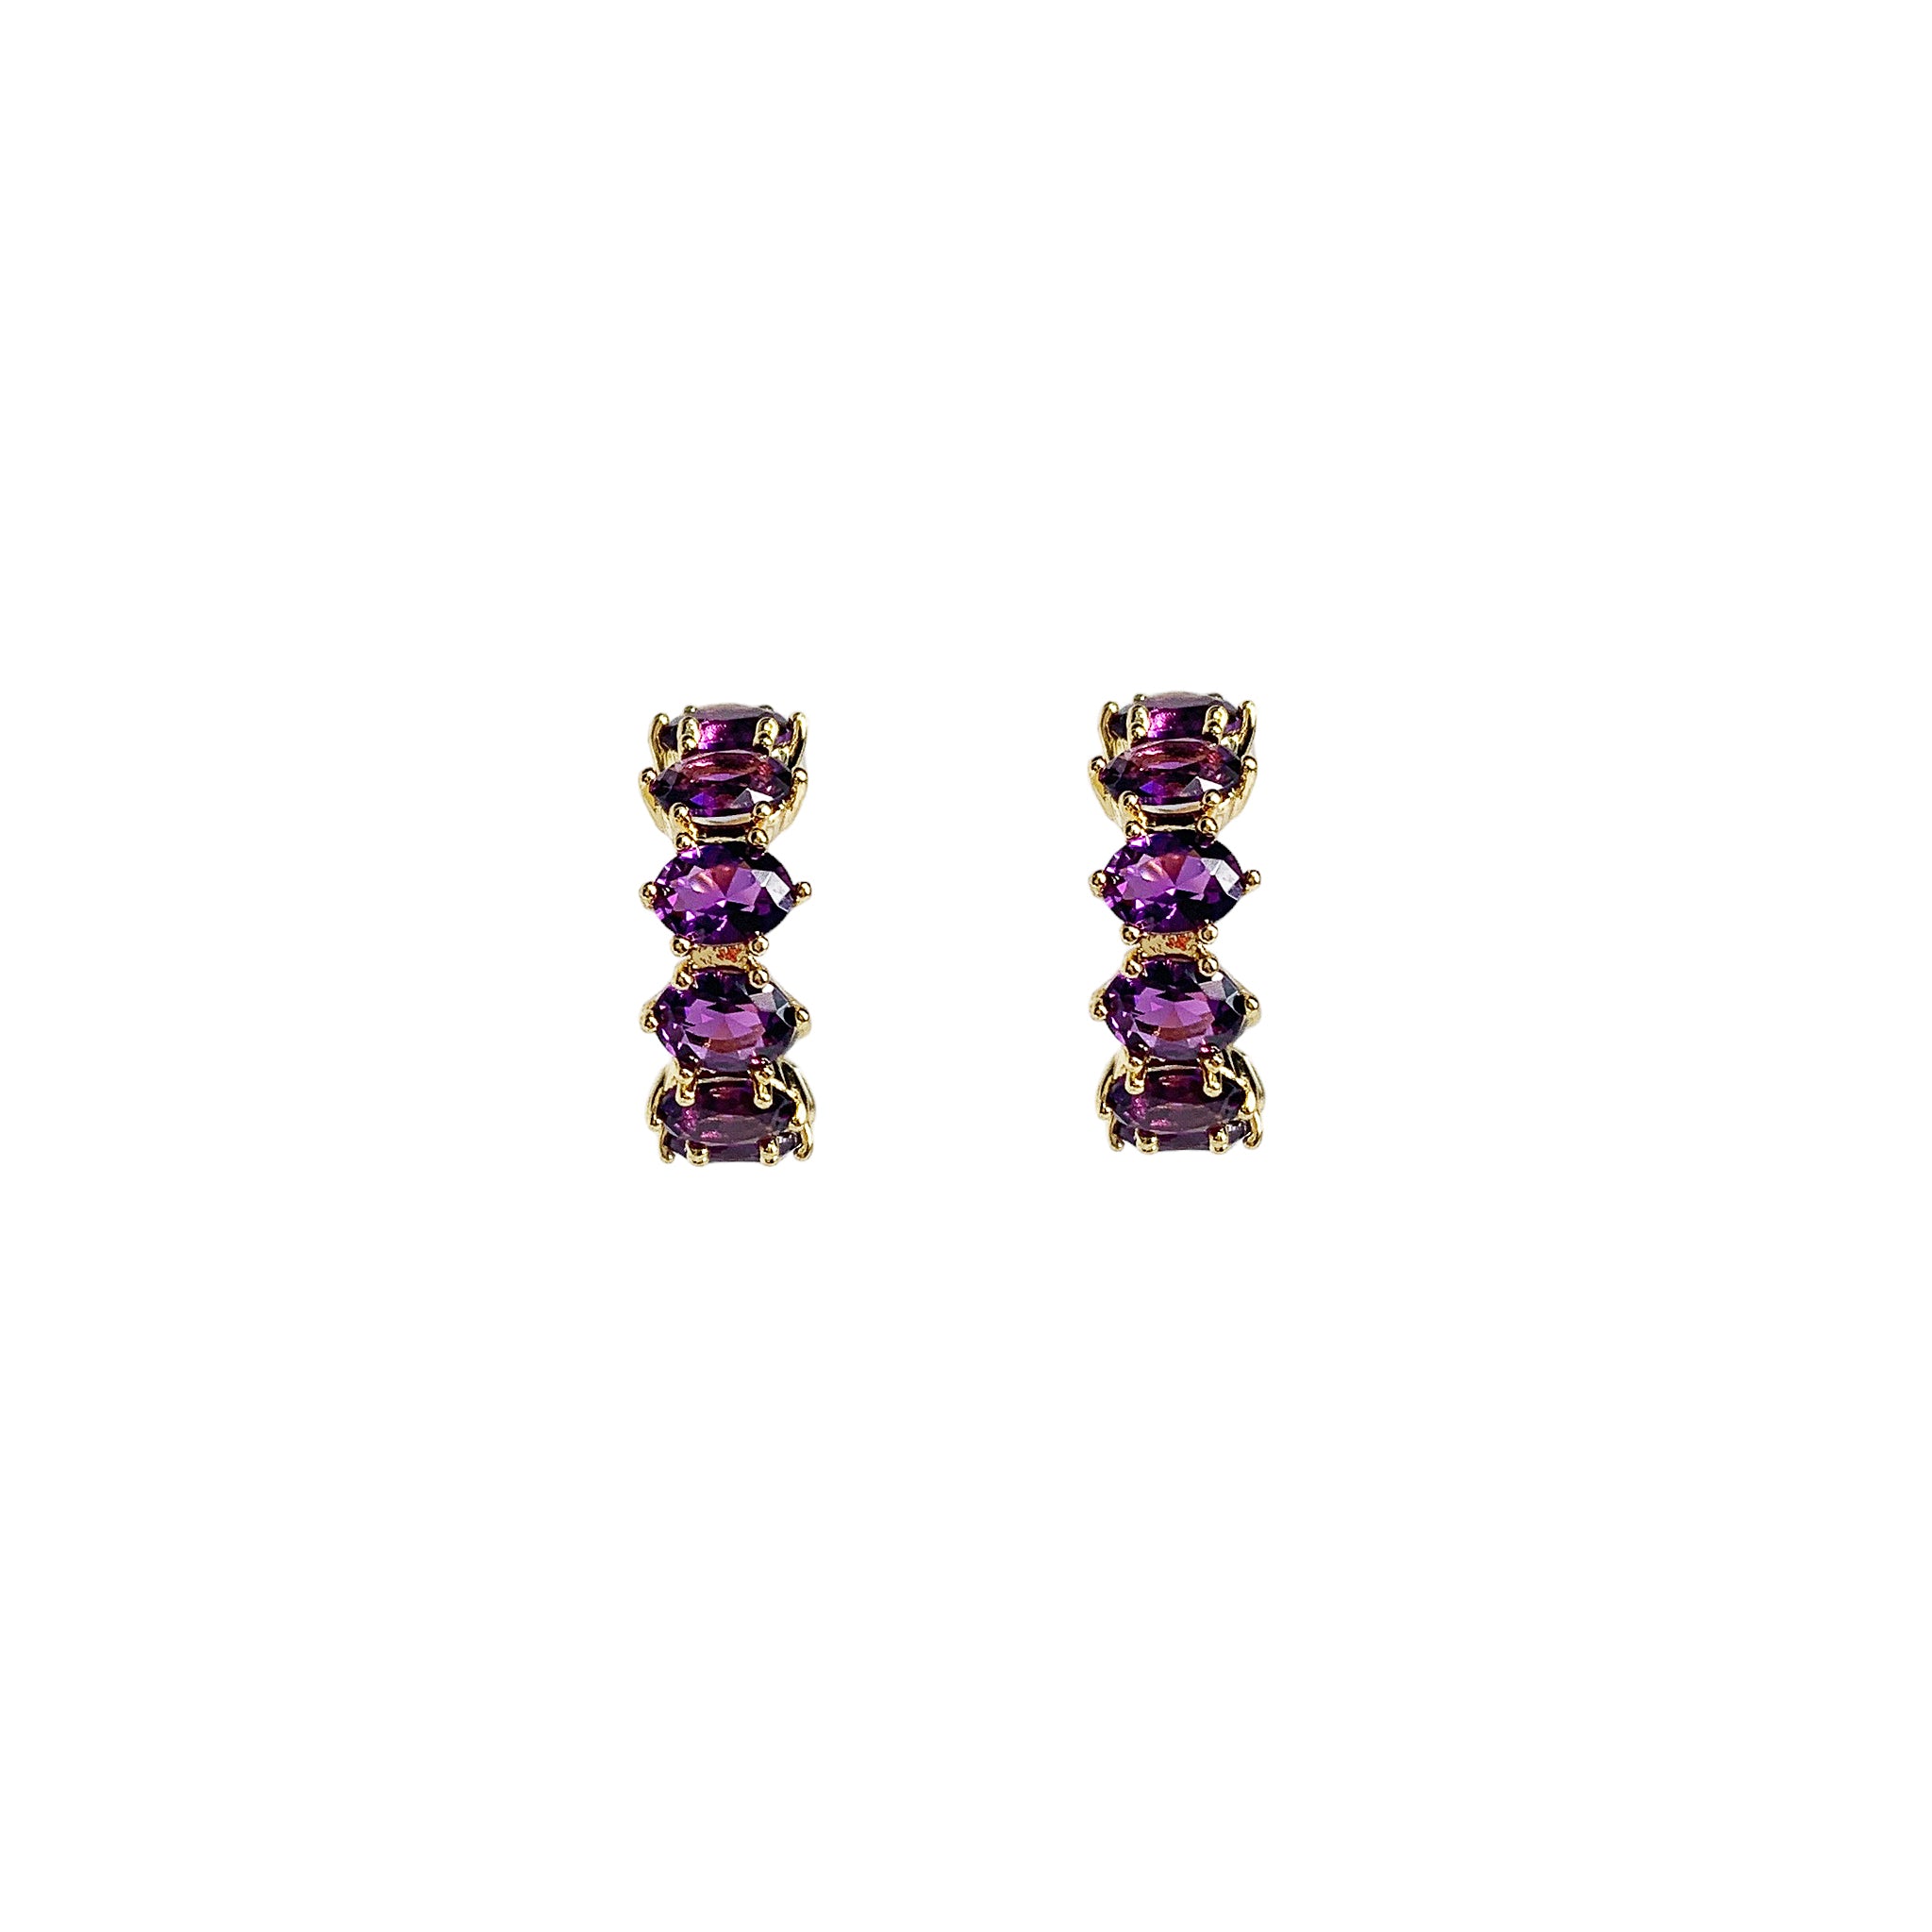 Kendra Scott Cailin Huggie Hoop Earrings in Purple Crystal and Gold Plated